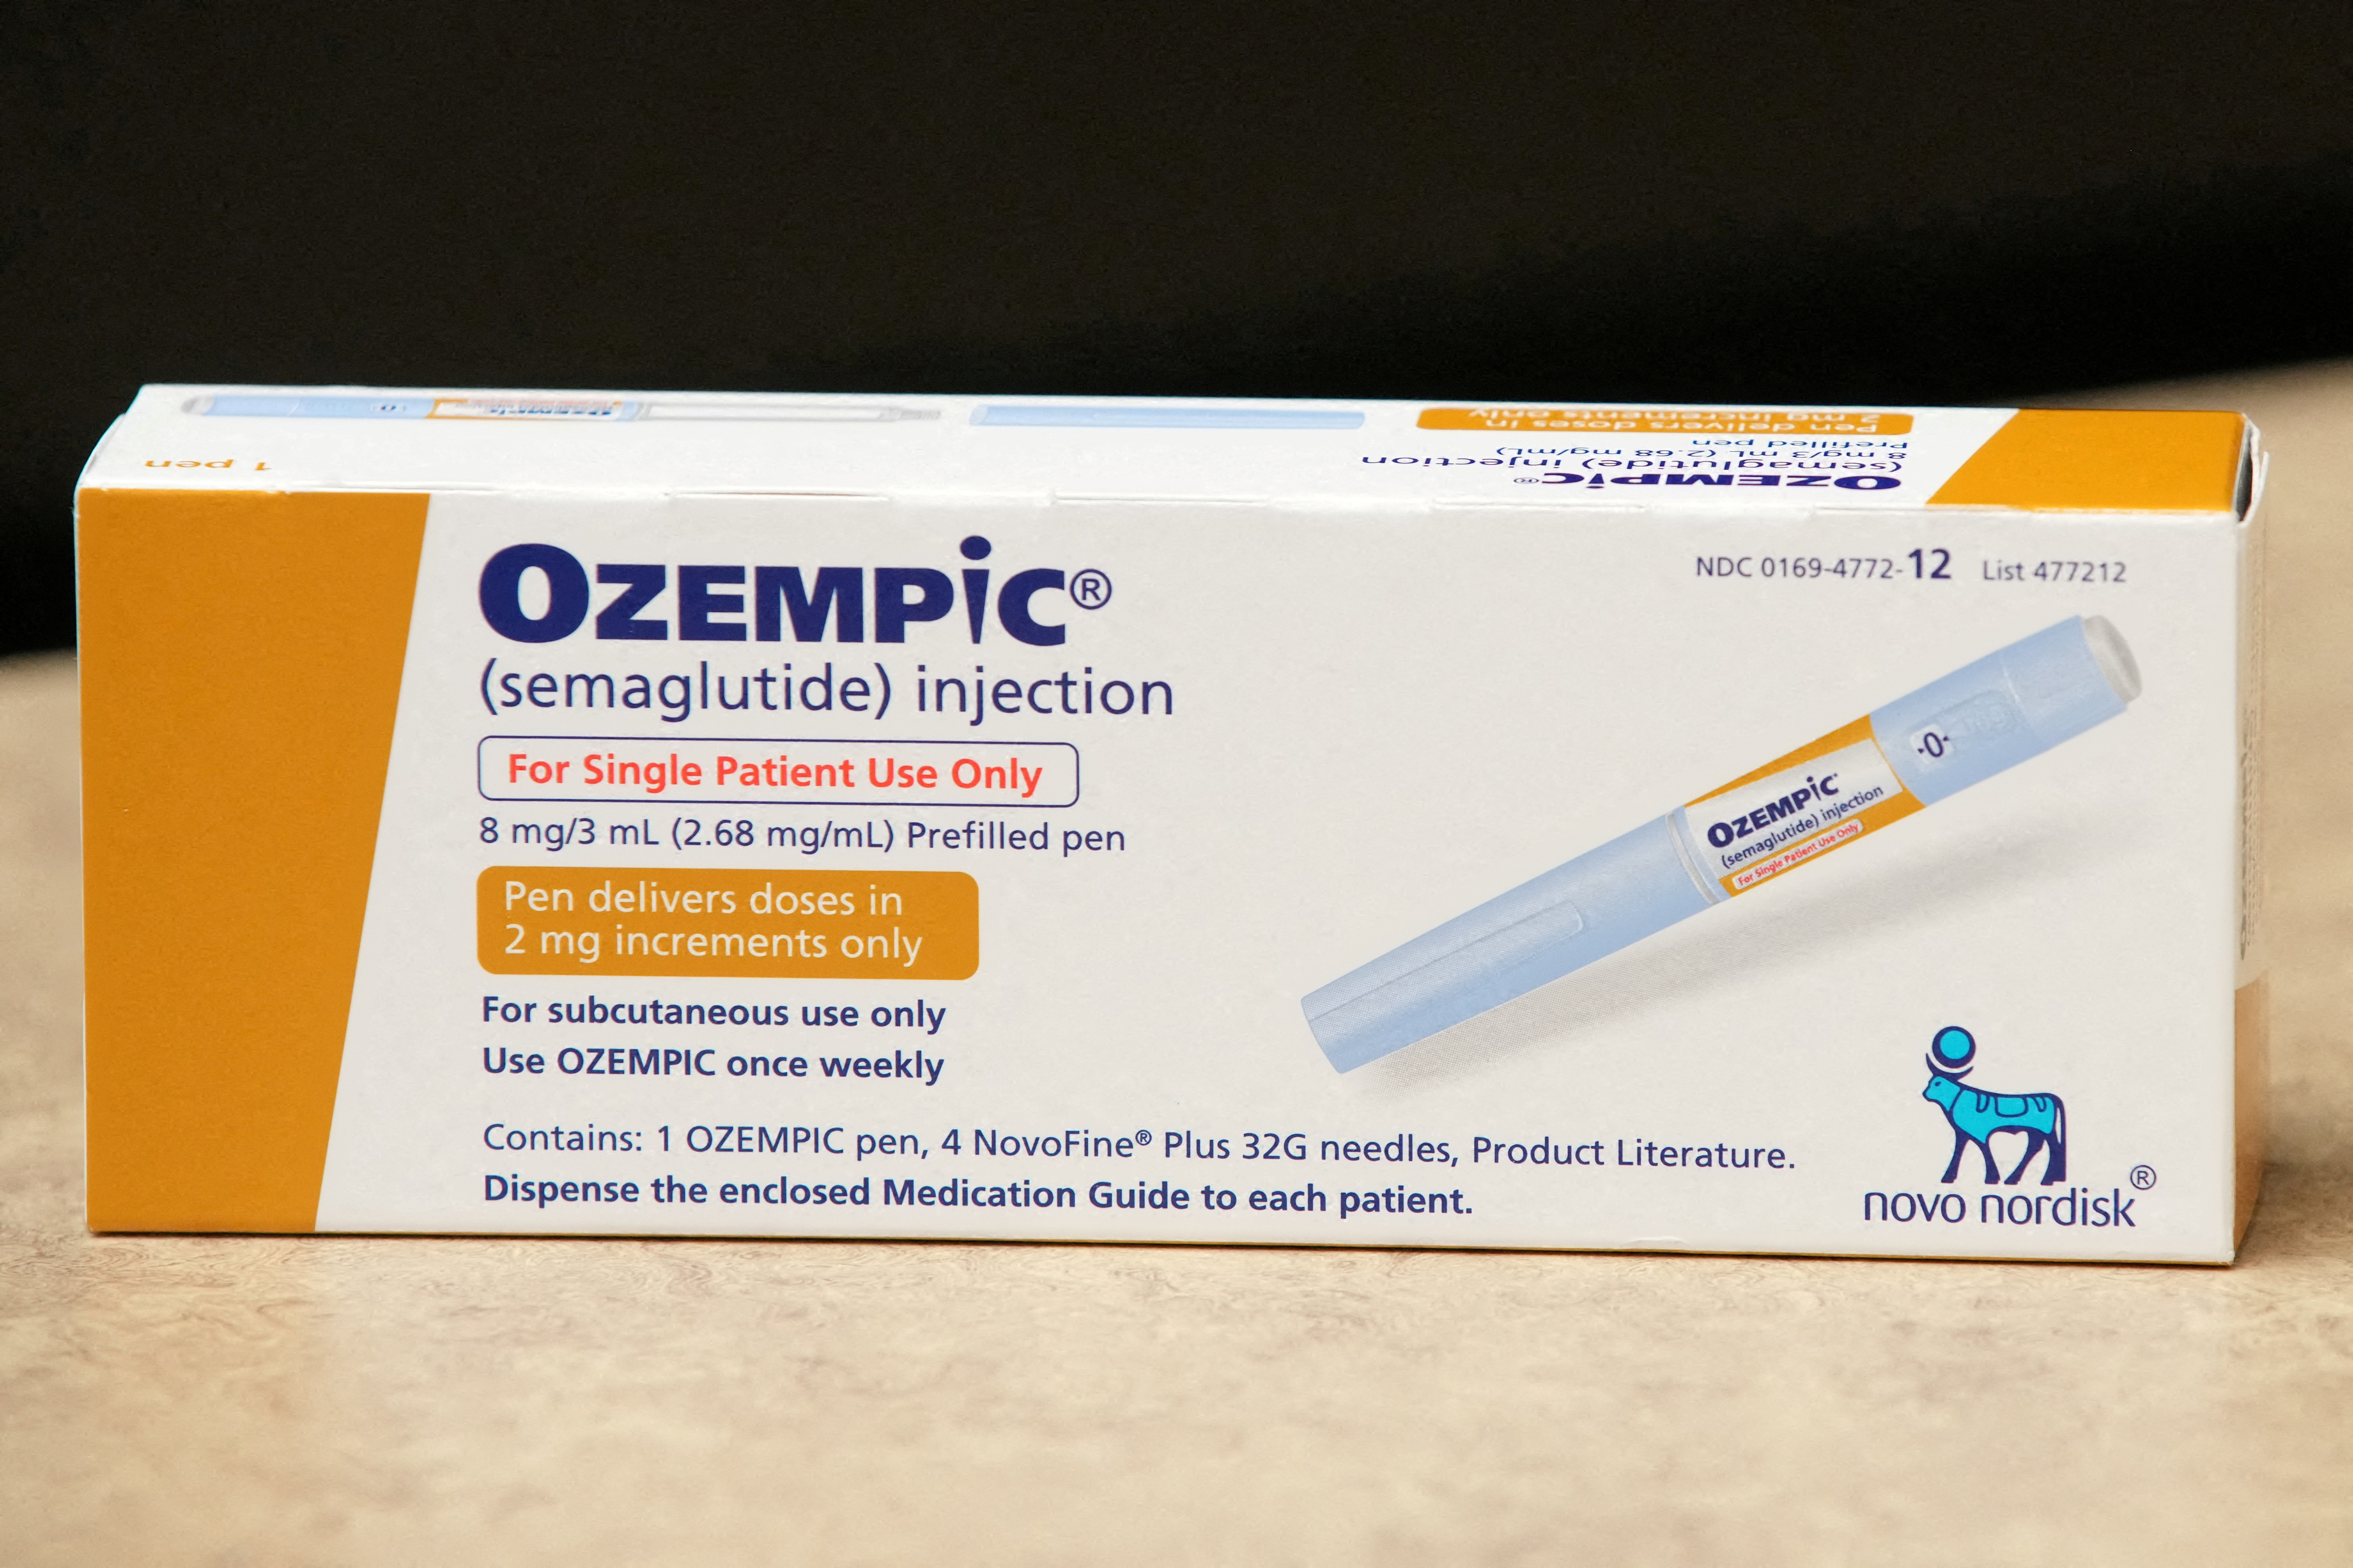 UK warns of fake Ozempic pens after hospitalisations